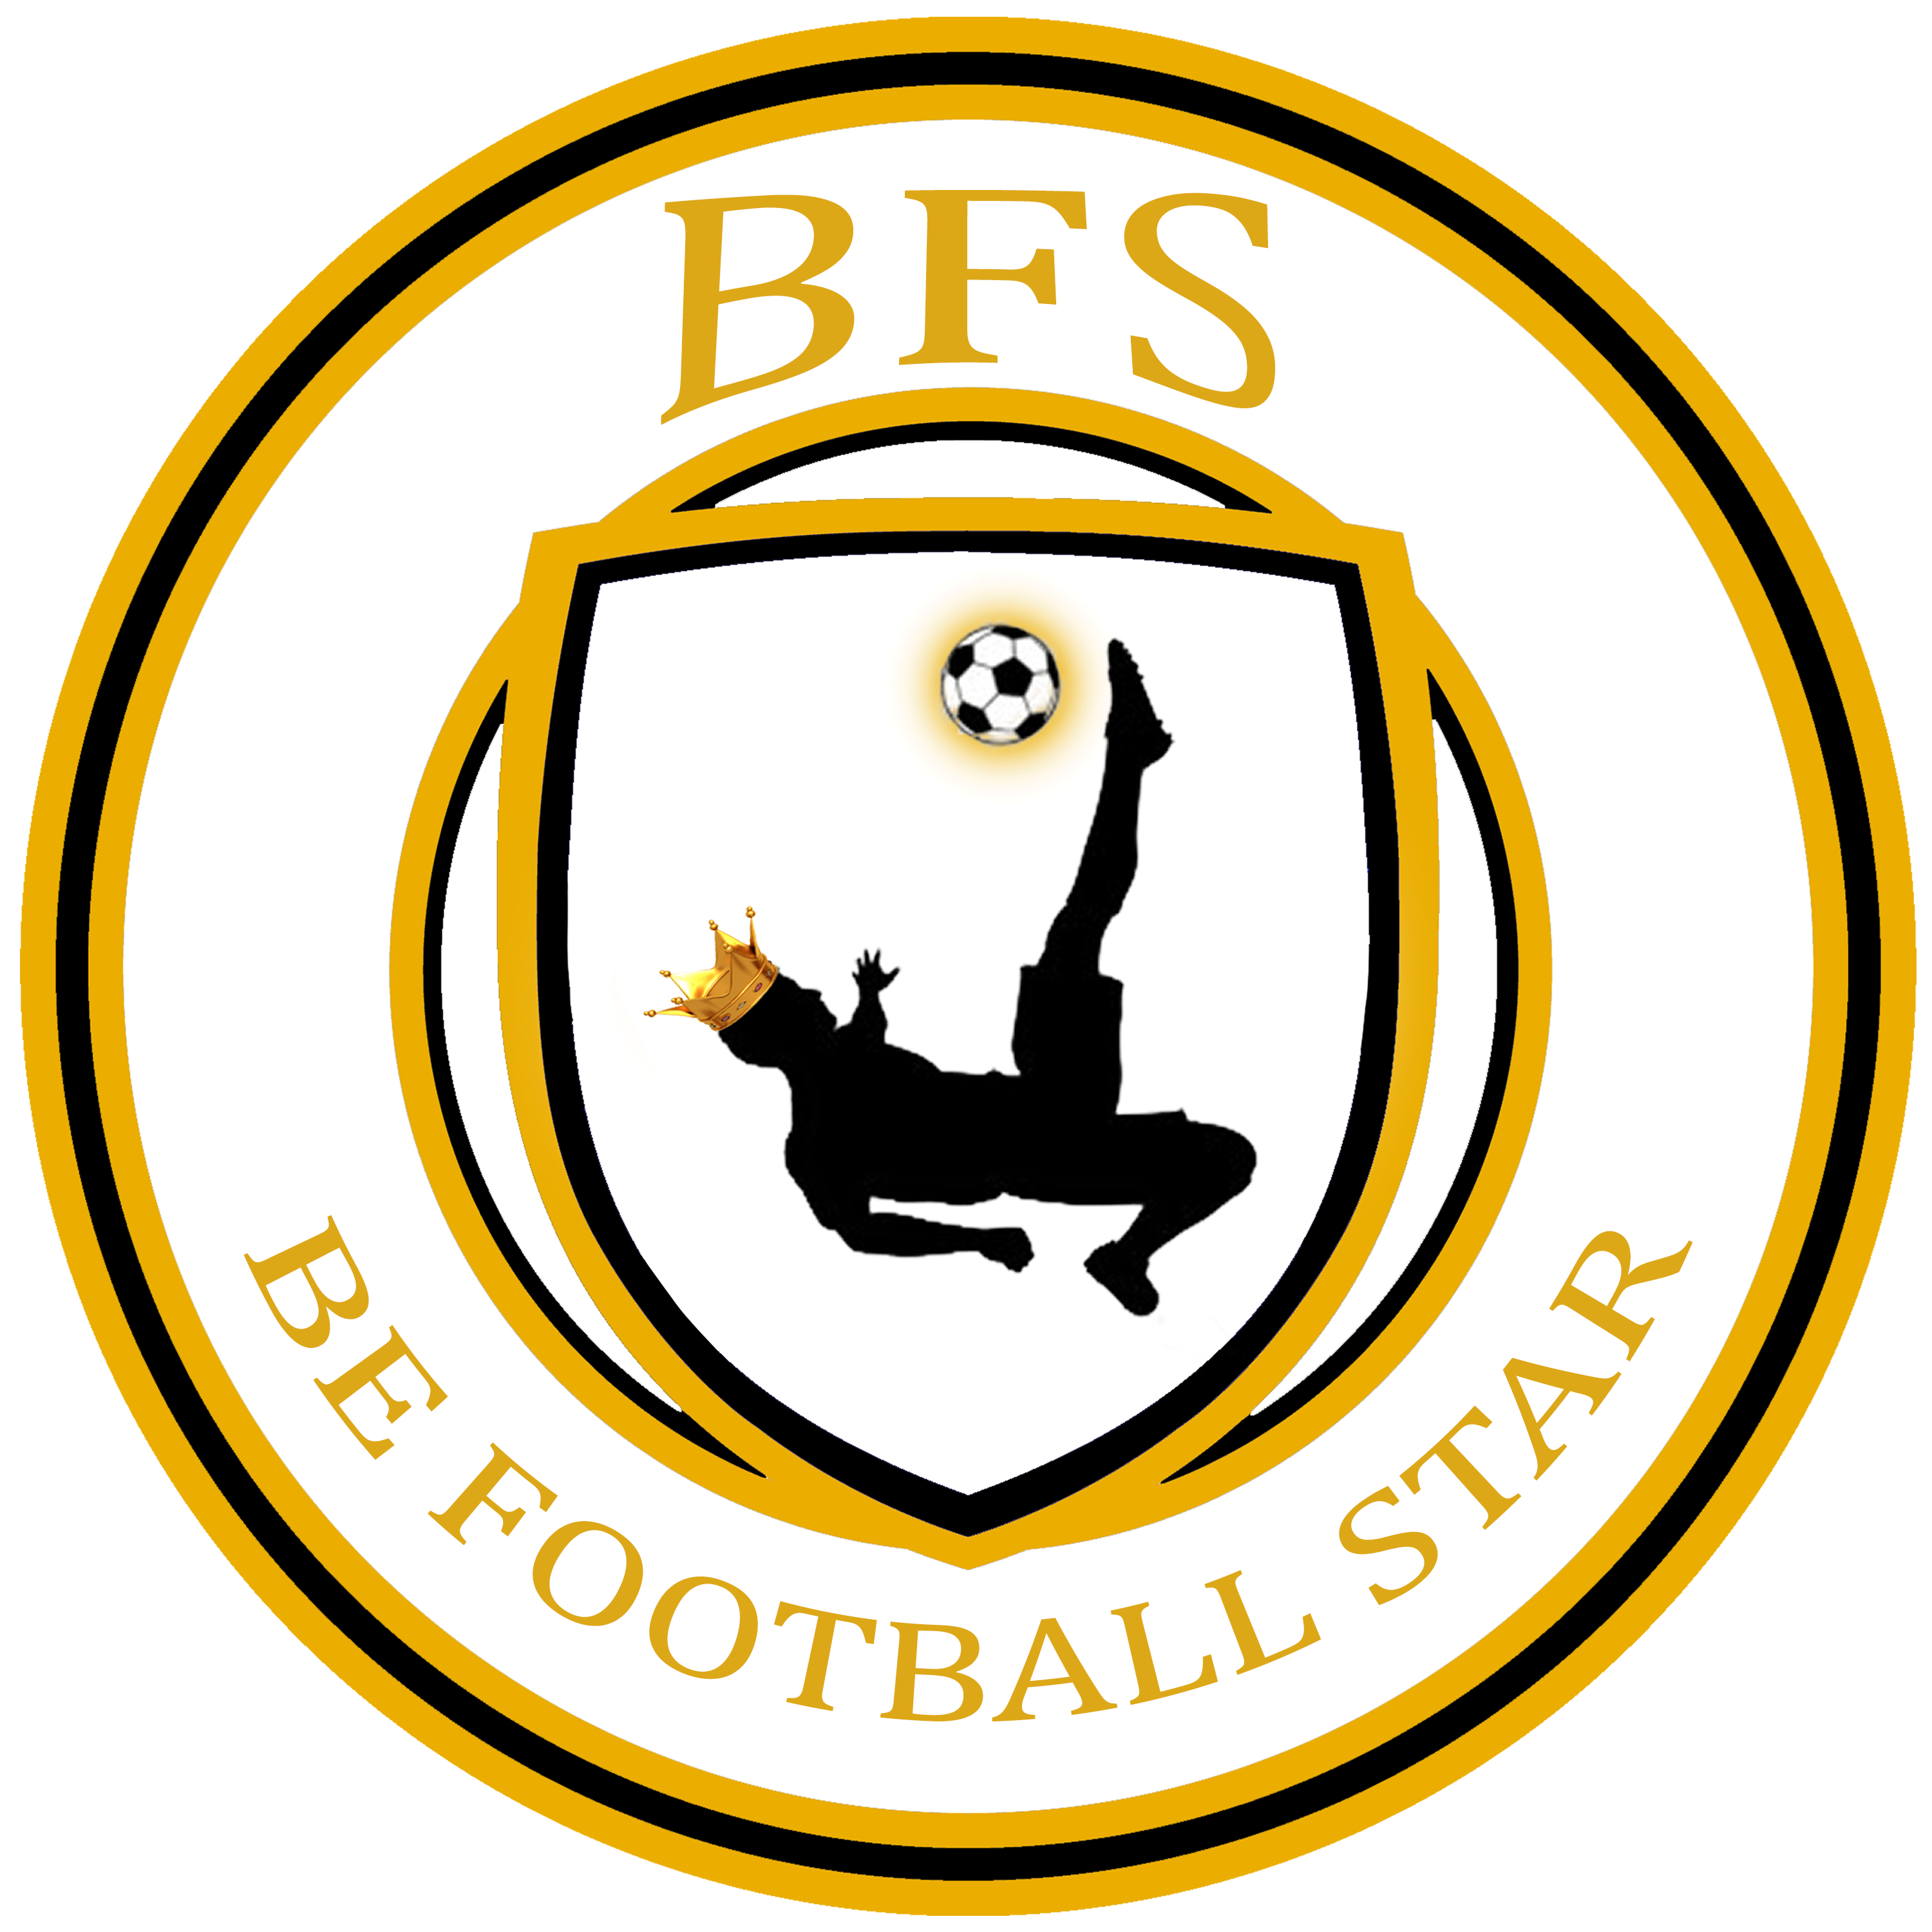 logo 2 befootball star